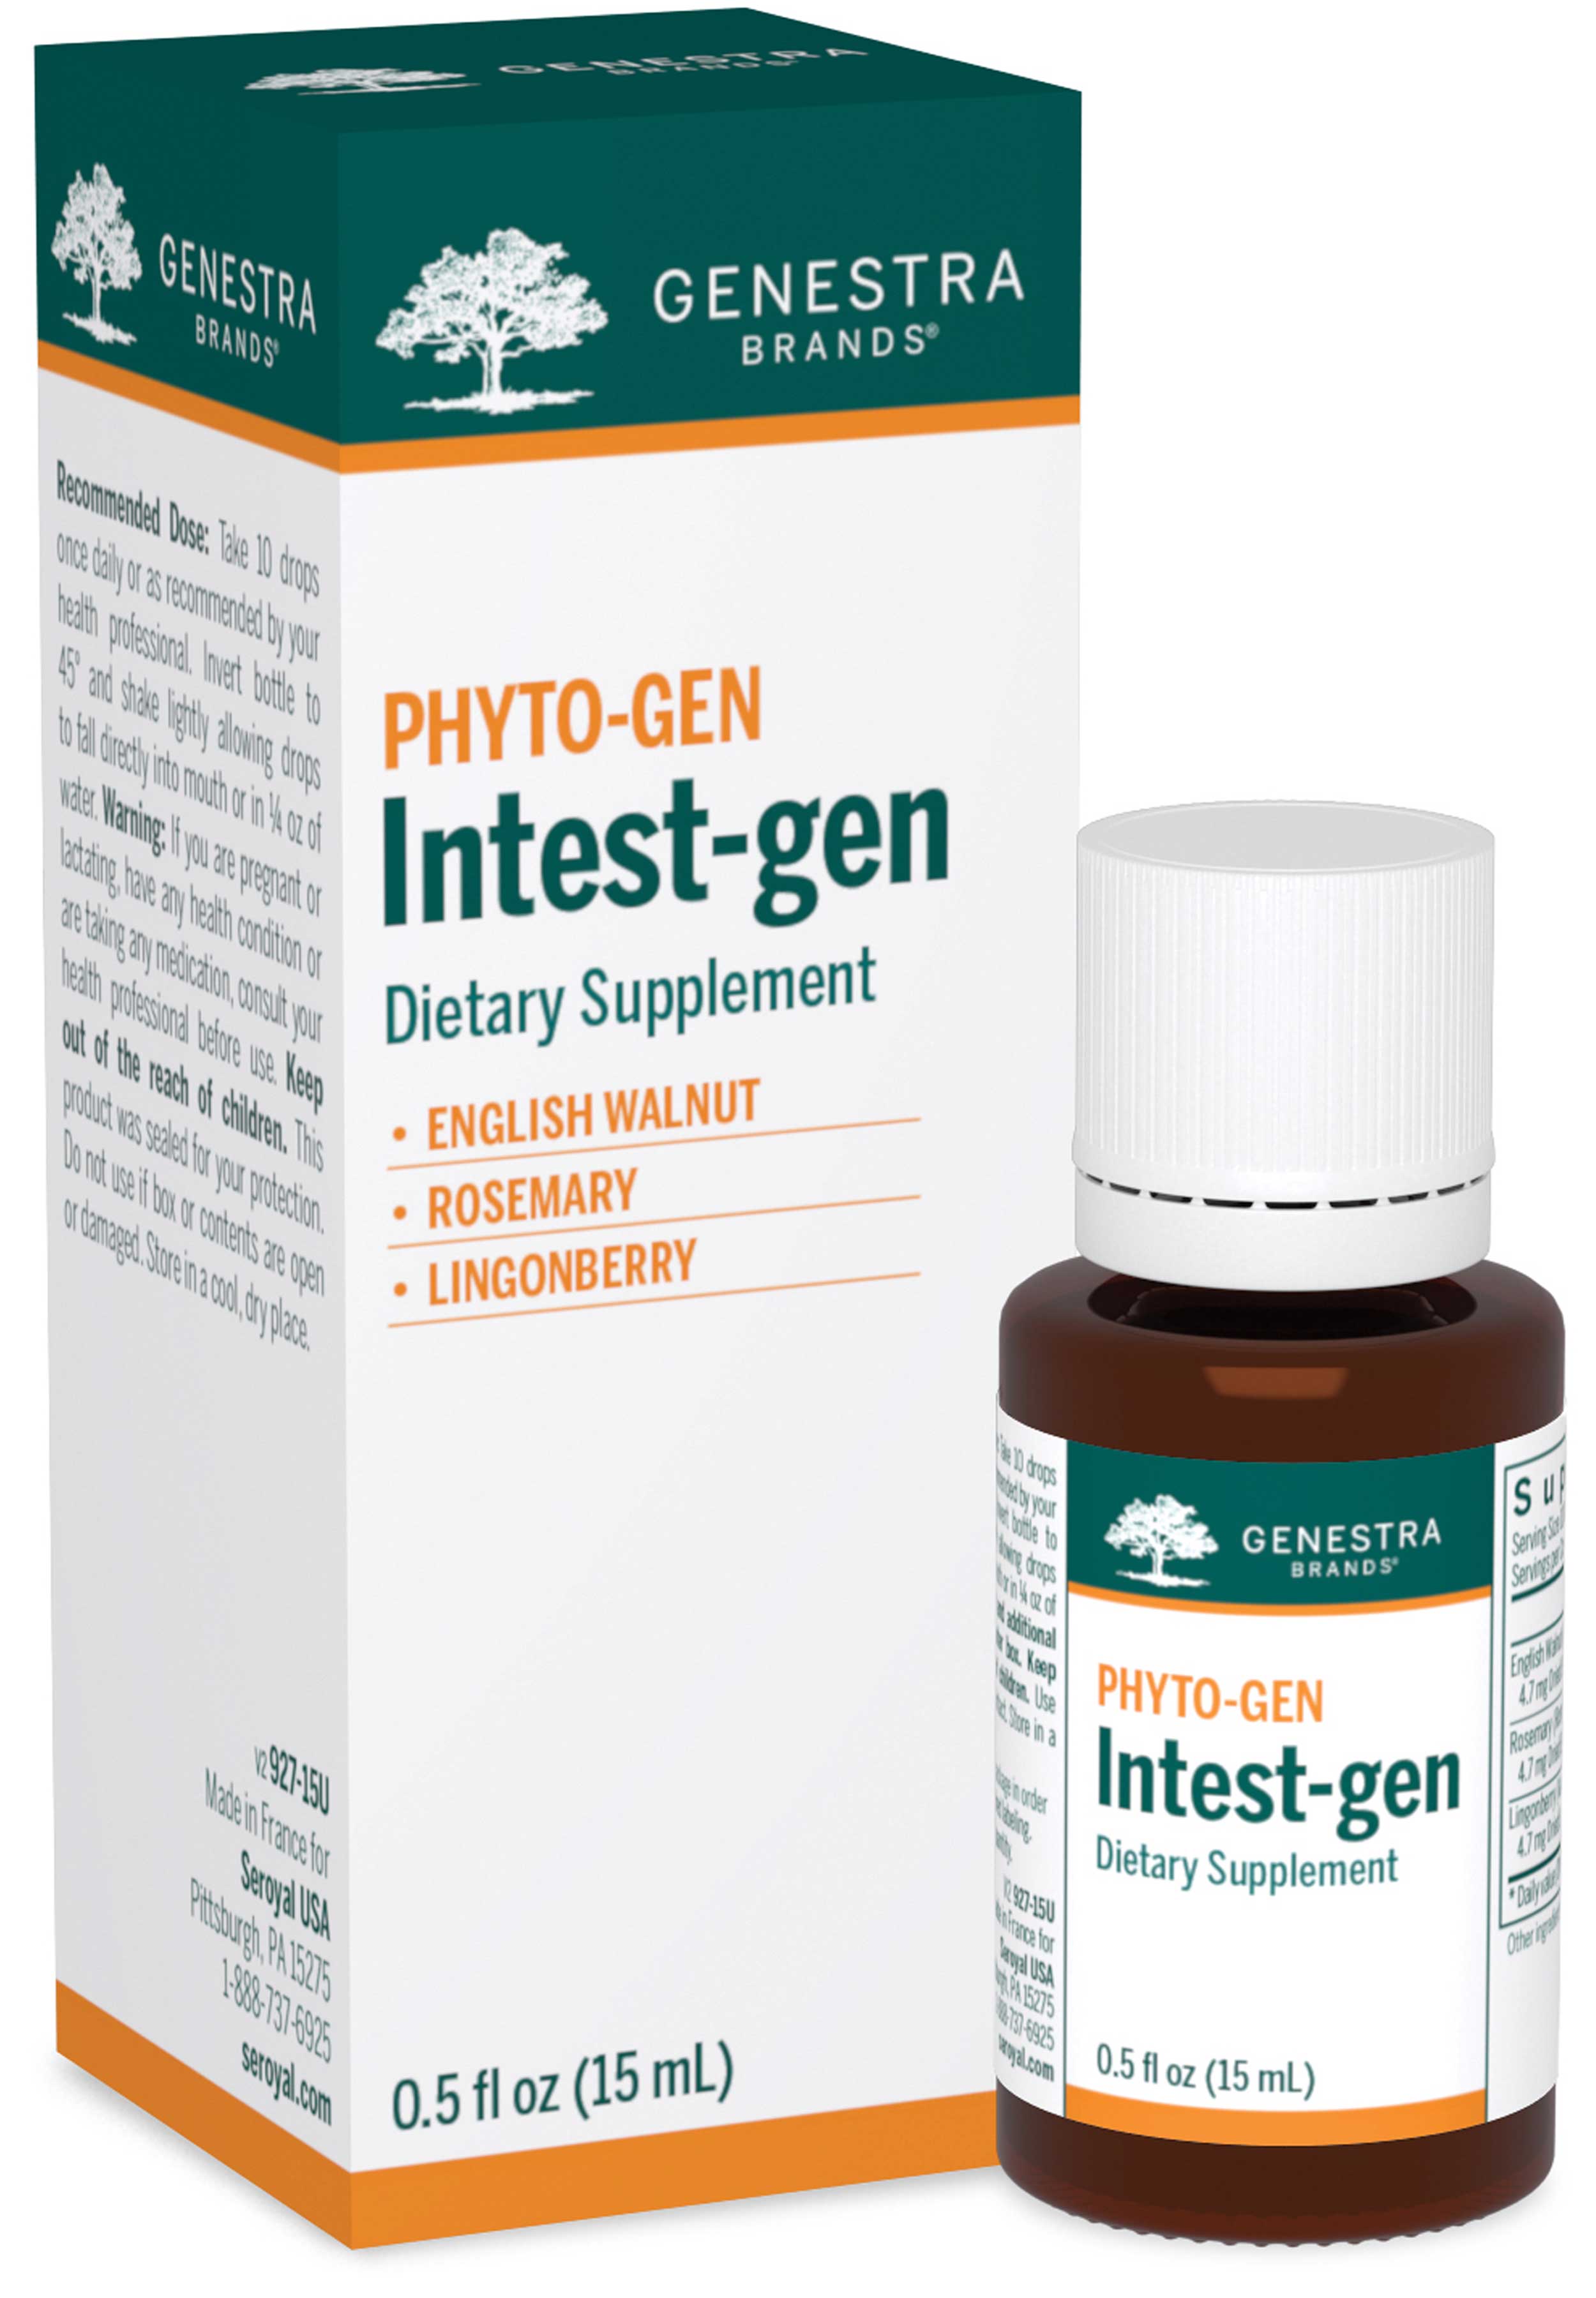 Genestra Brands Intest-gen